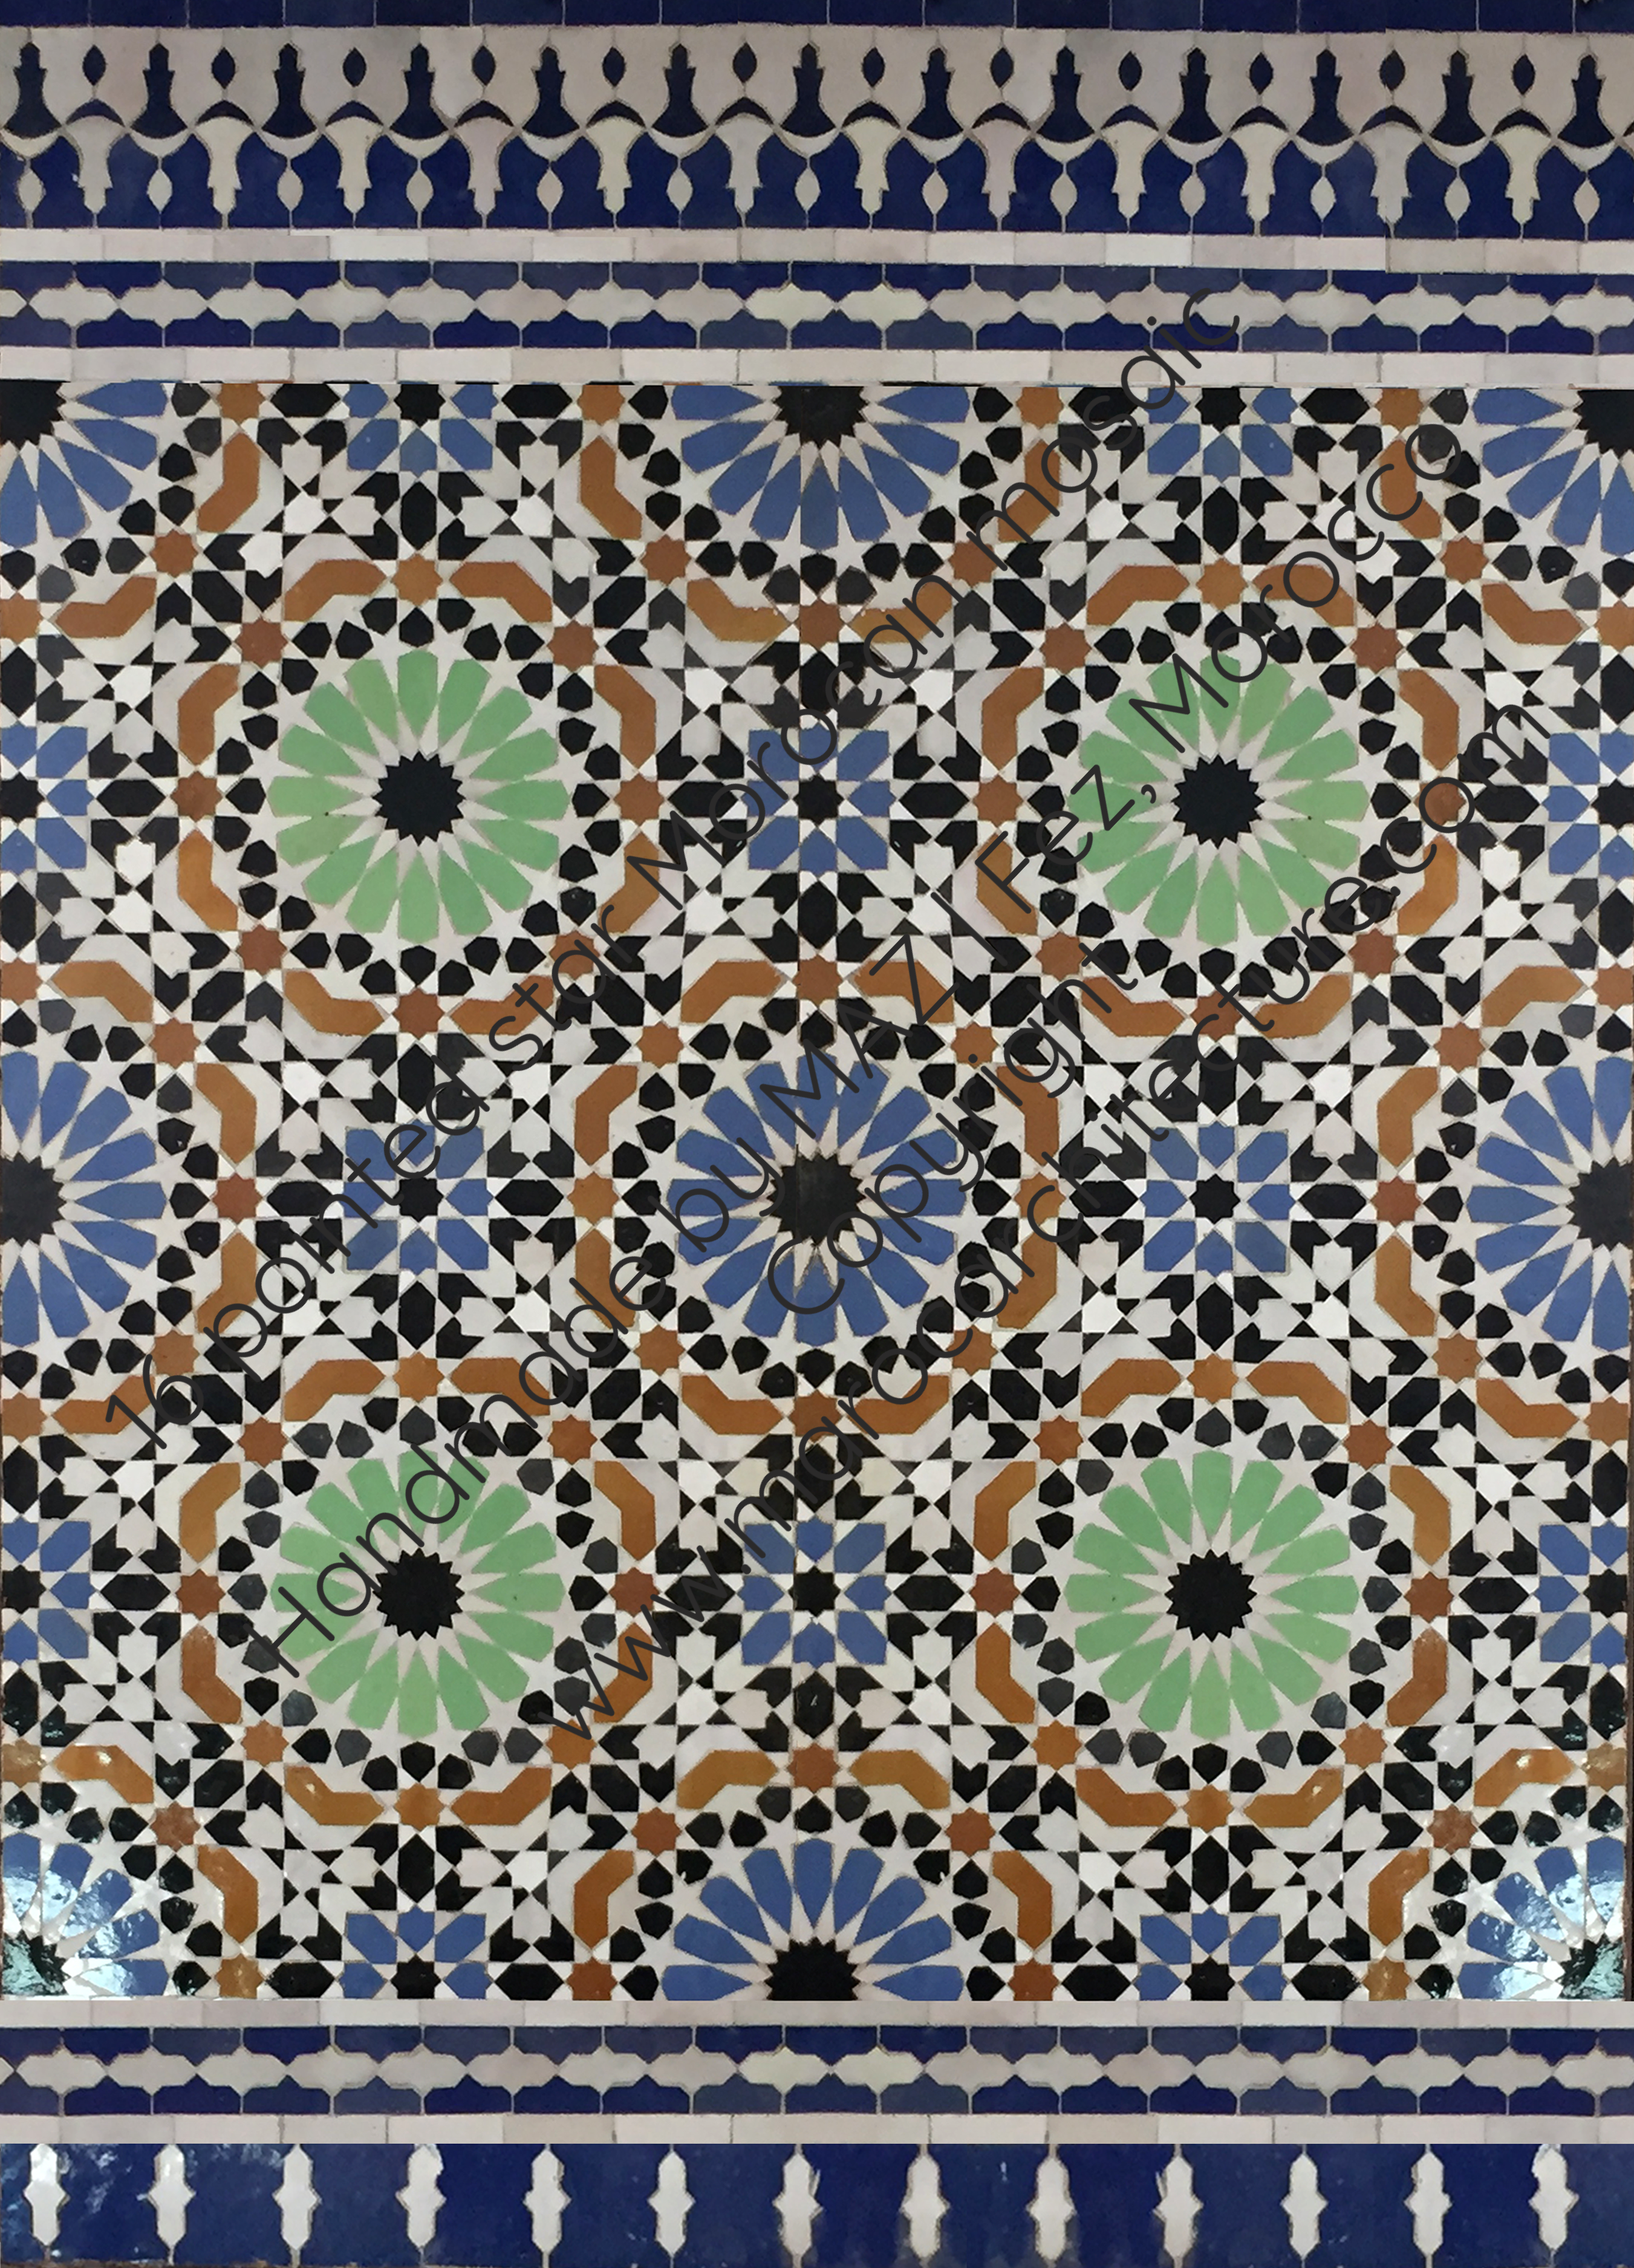 16 pointed star Moroccan mosaic by Maroc Architecture et Zellij, Fez, Morocco Copyright www.marocarchitecture.com 